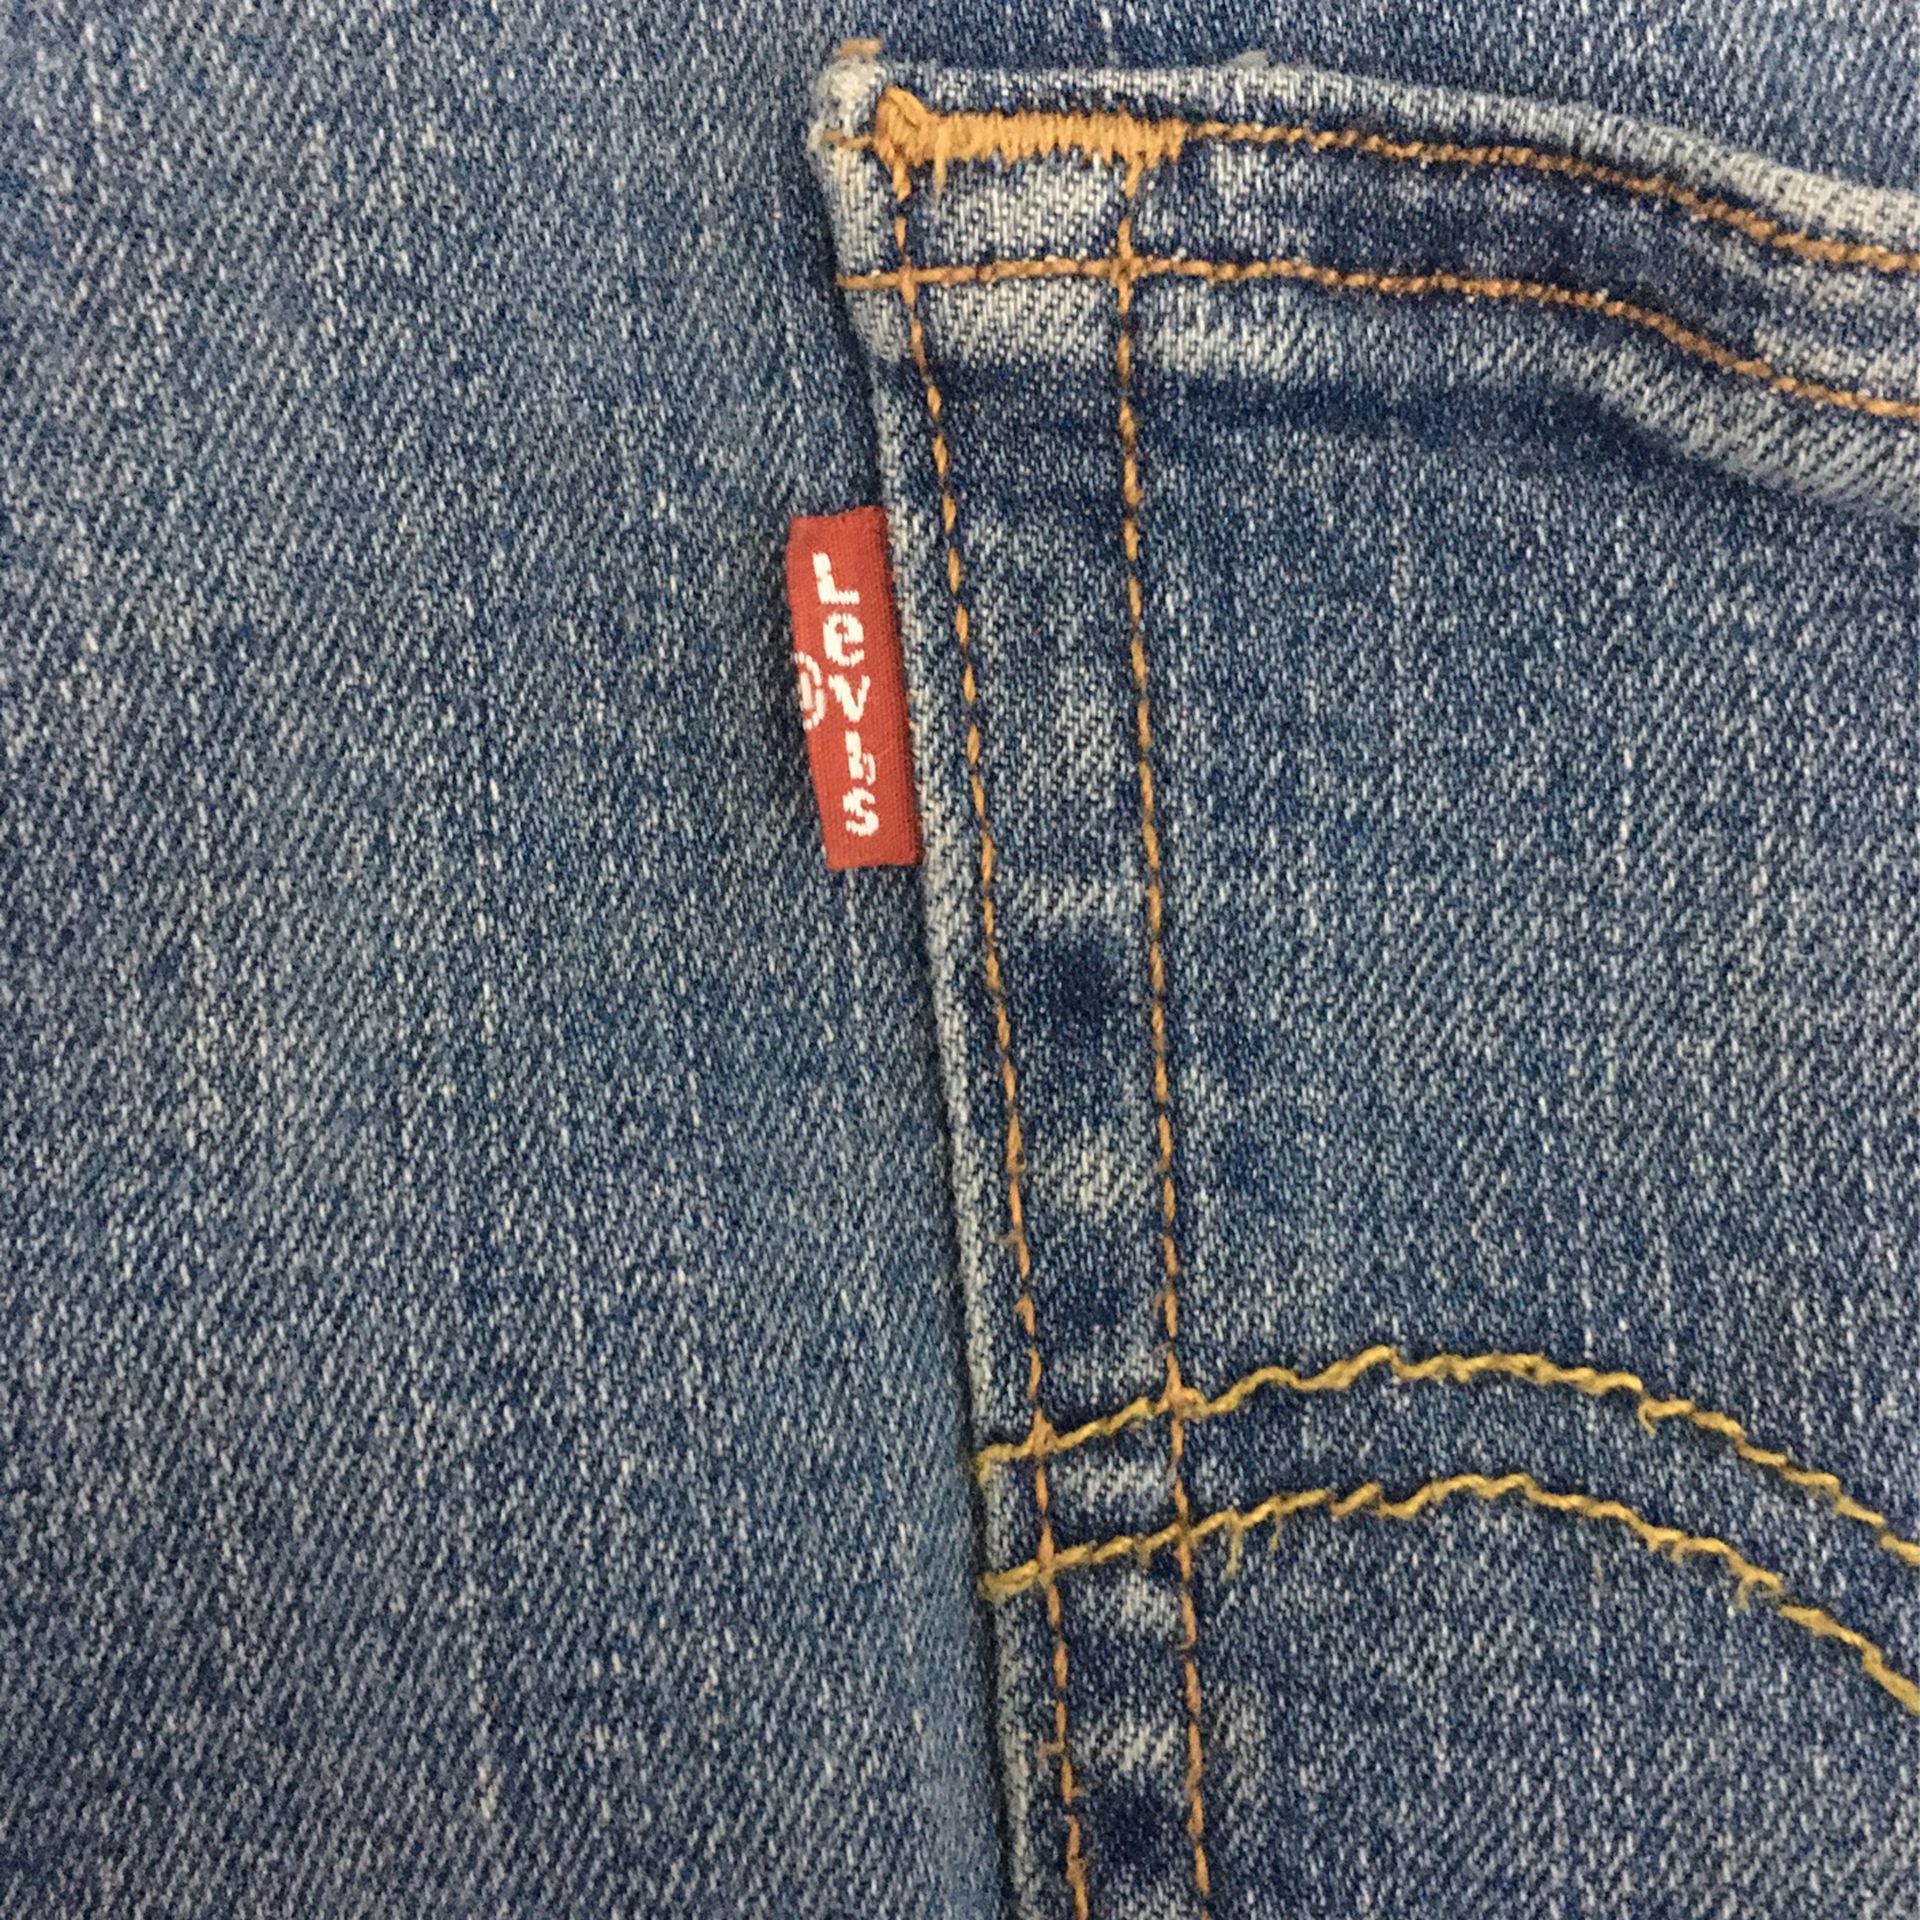 Levi’s 501 Button Fly Jeans, Light Blue